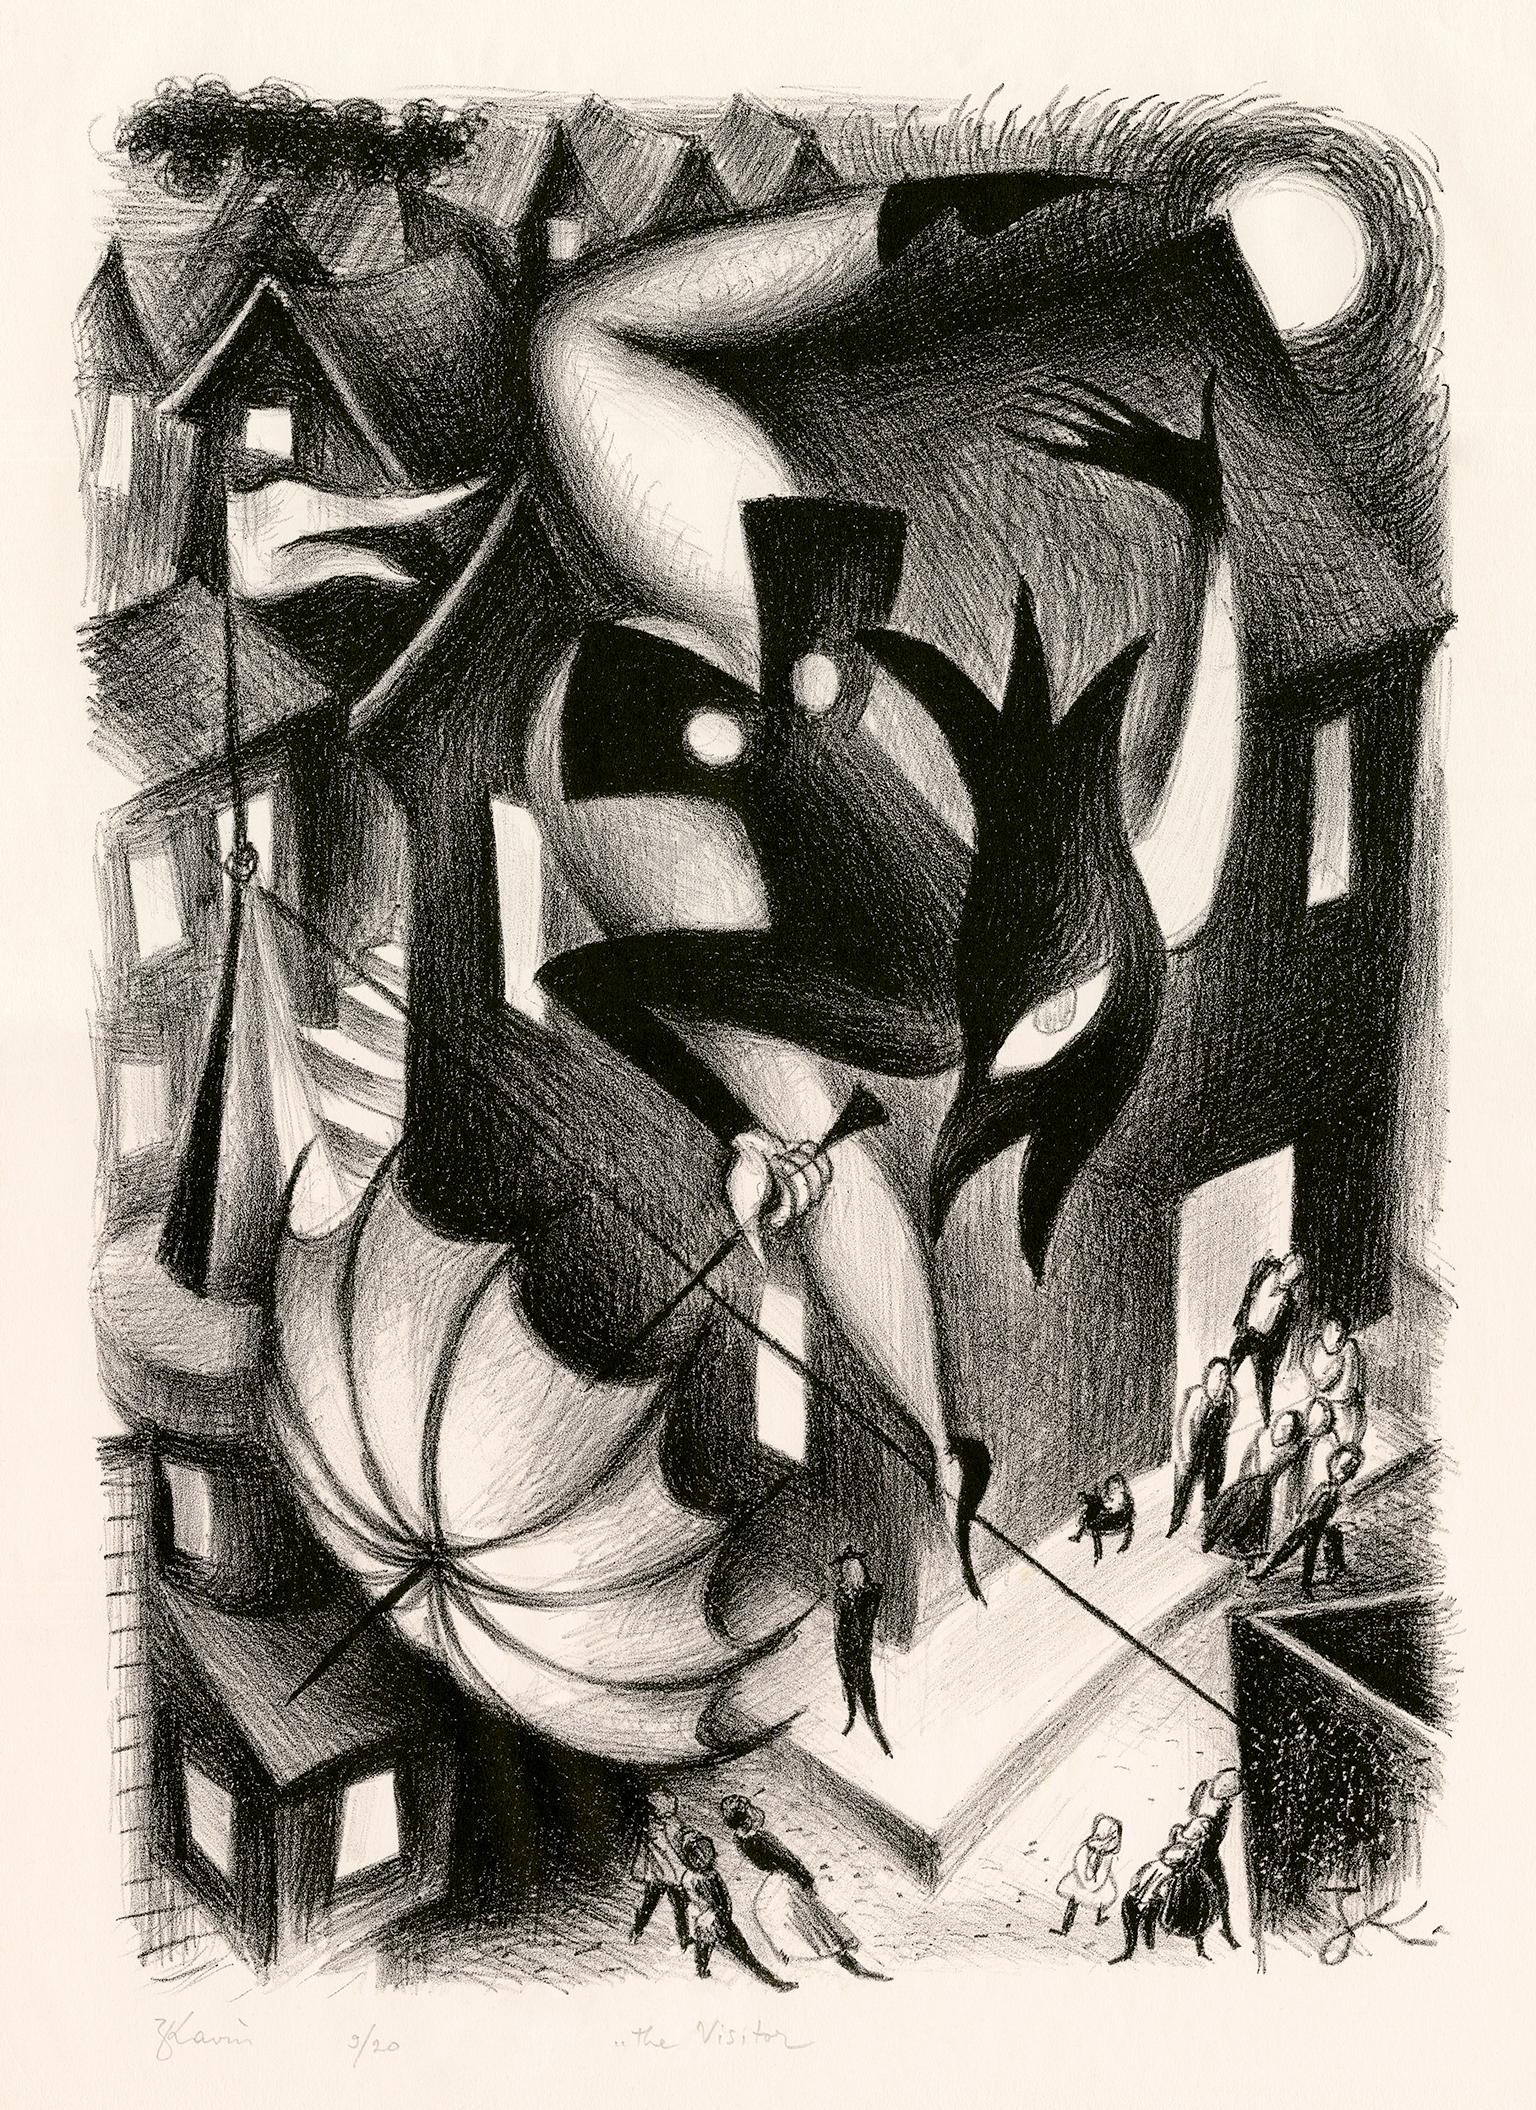 Zena Kavin Figurative Print - 'The Visitor' — 1930s Surrealist Fantasy